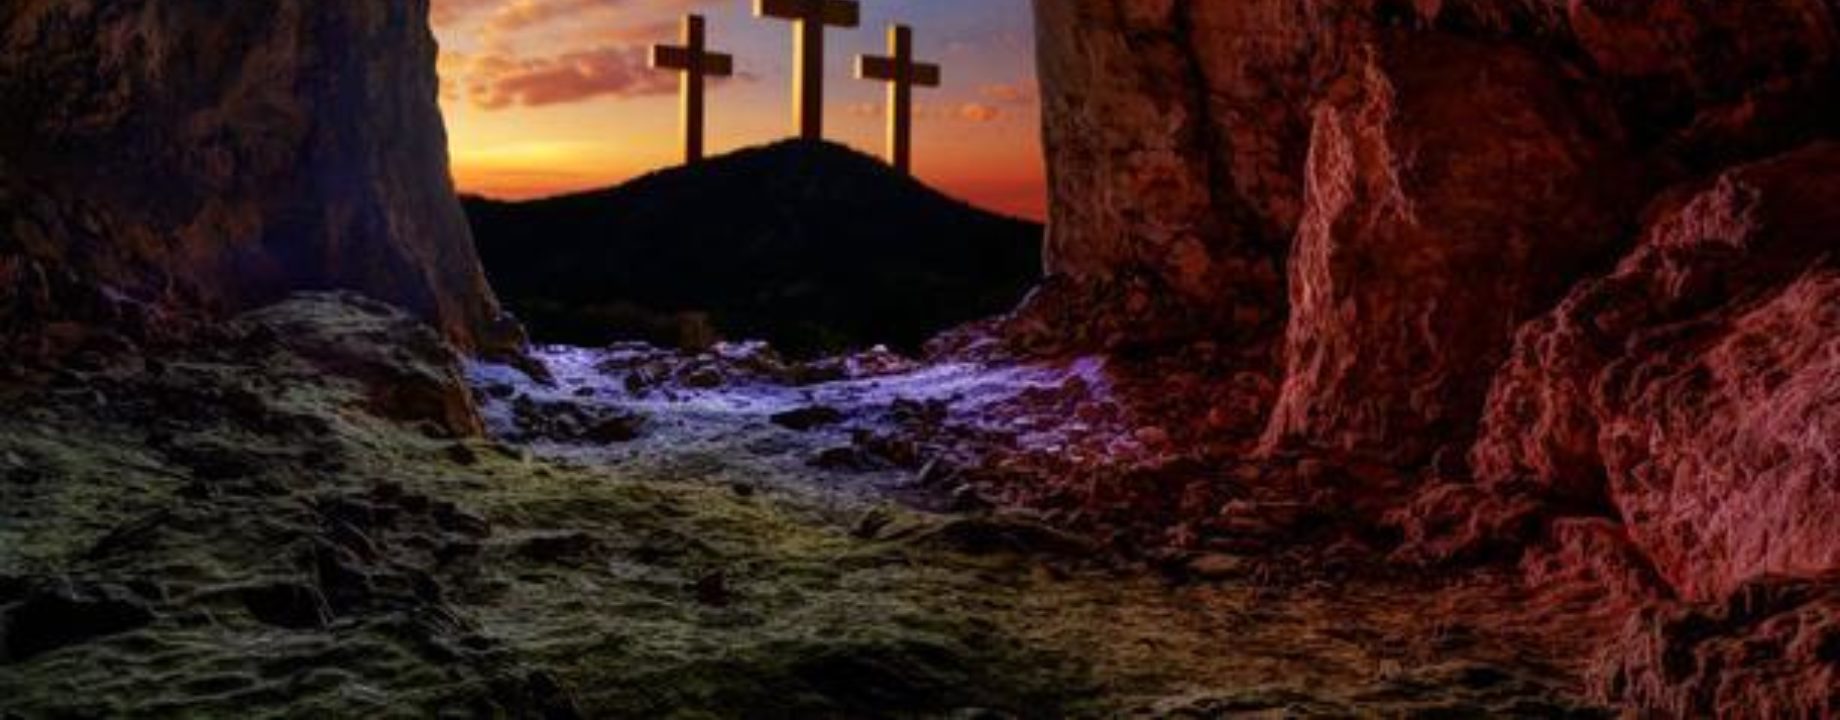 Stock photo jesus resurrection sepulcher grave cross